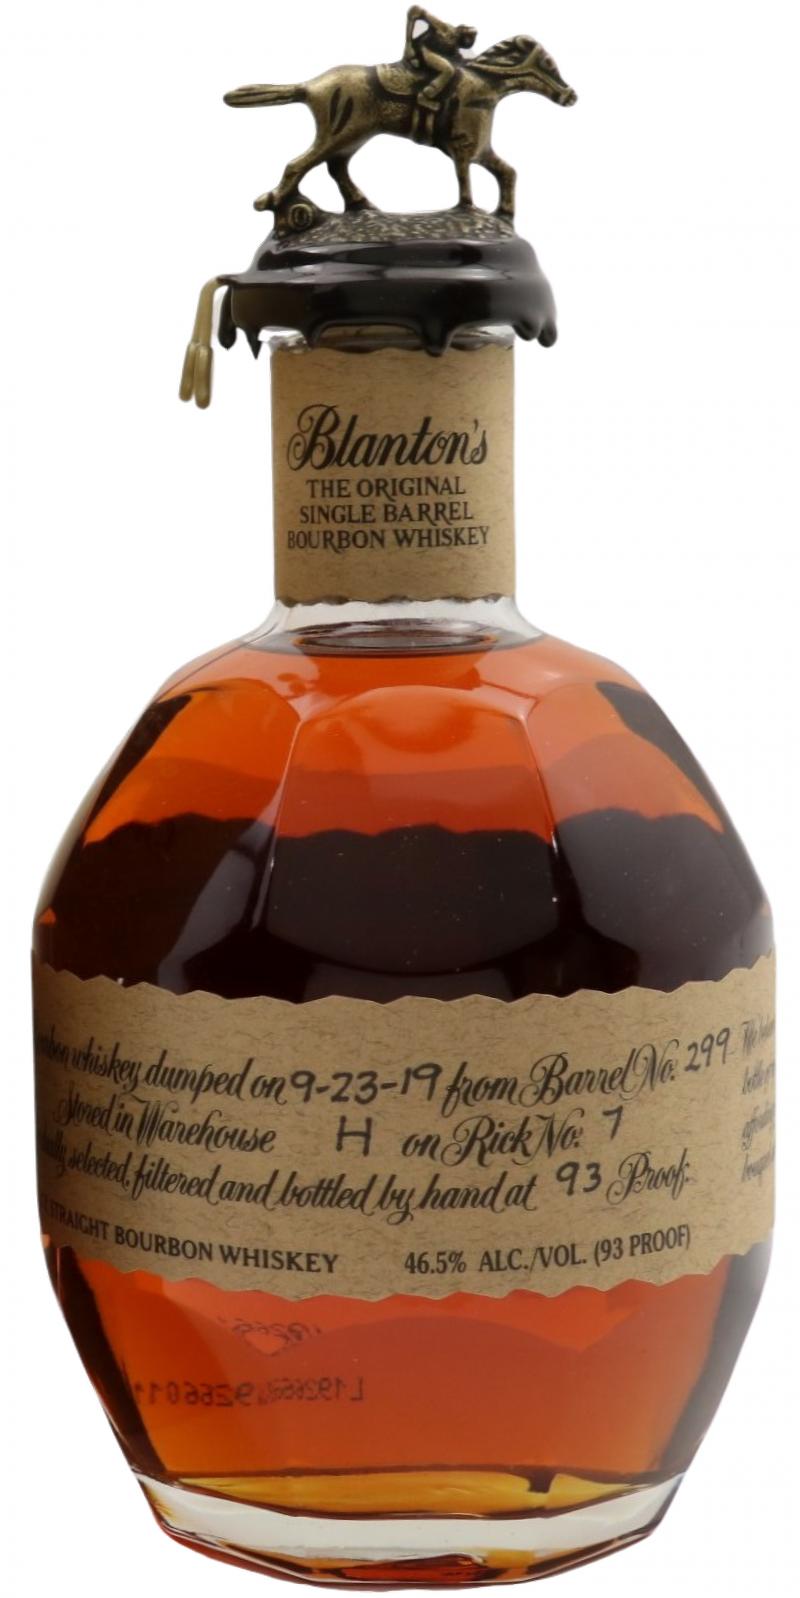 Blanton's The Original Single Barrel Bourbon Whisky #299 46.5% 700ml